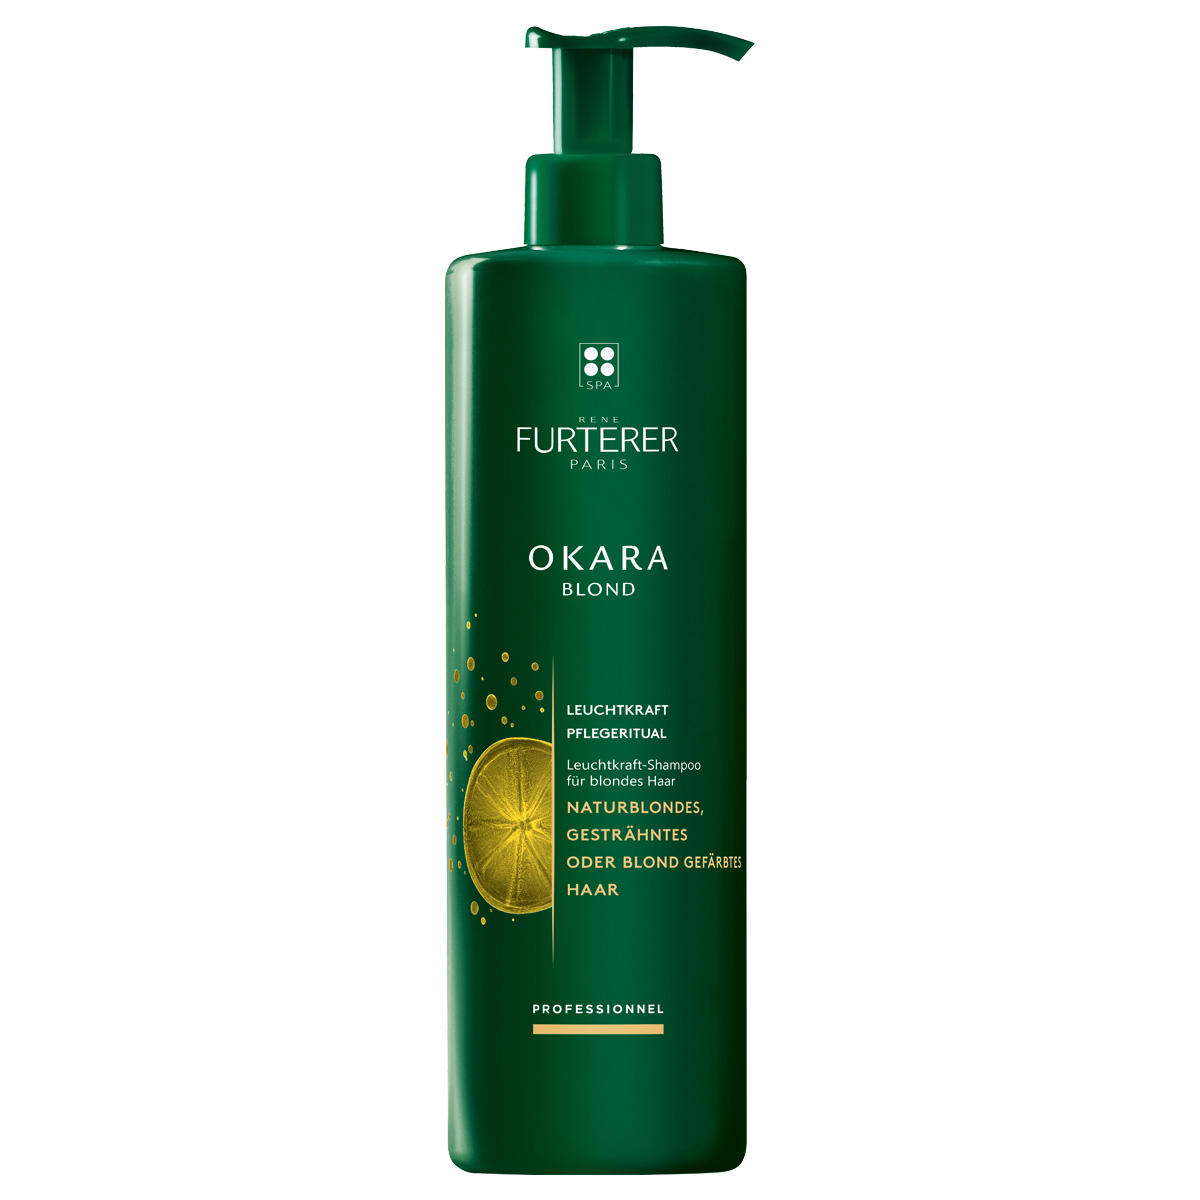 René Furterer Okara Blond Luminosity shampoo 600 ml - 1